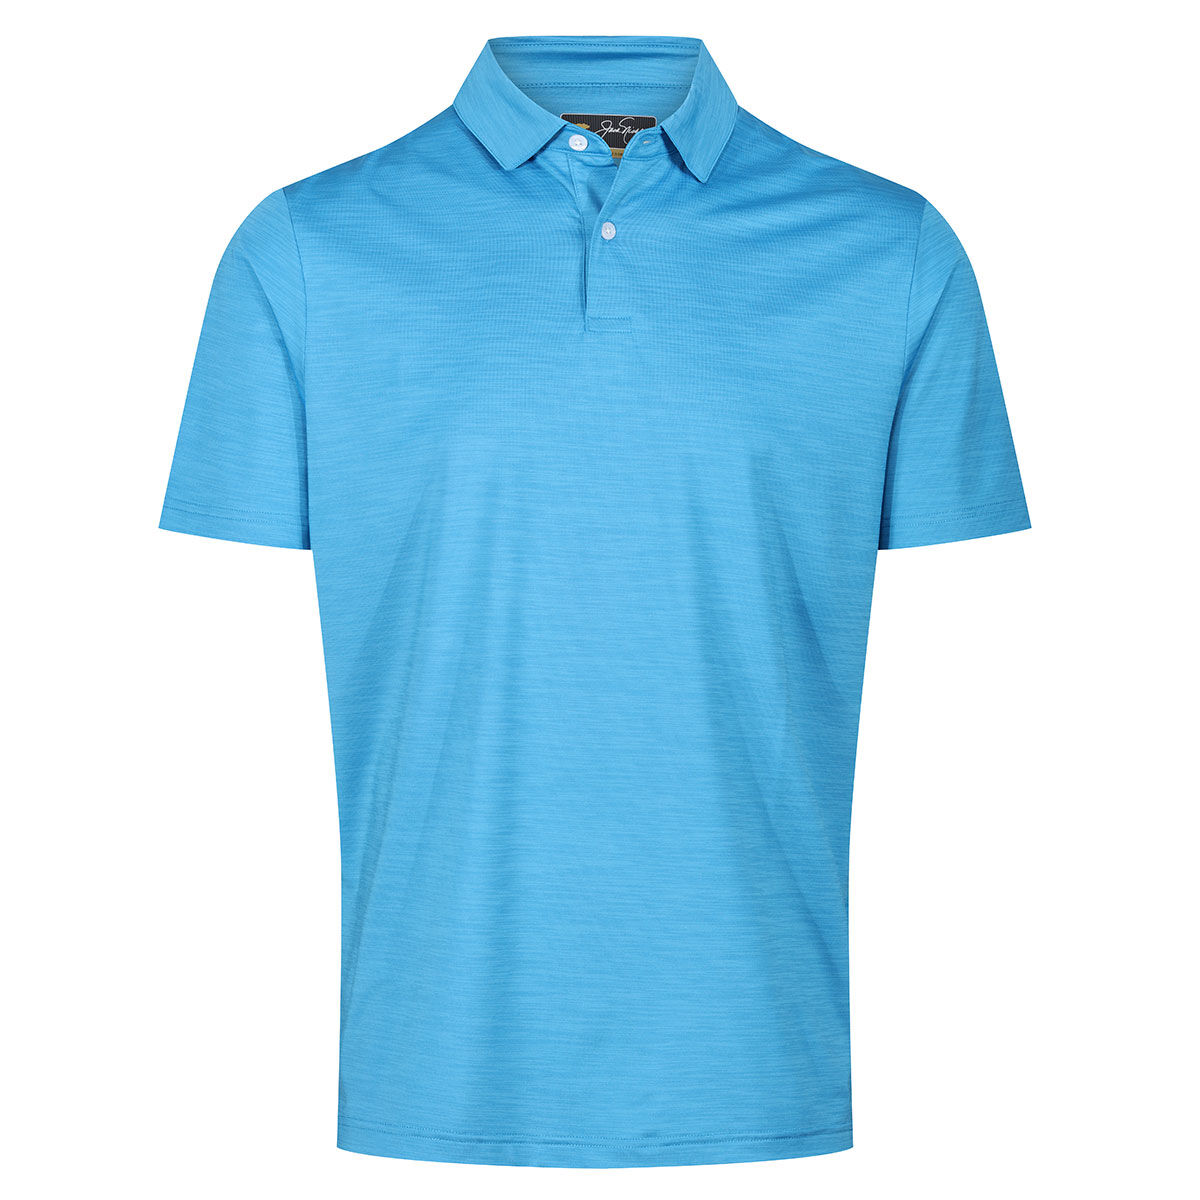 Jack Nicklaus Men's Tonal Golf Polo Shirt, Mens, Light blue, Large | American Golf von Jack Nicklaus